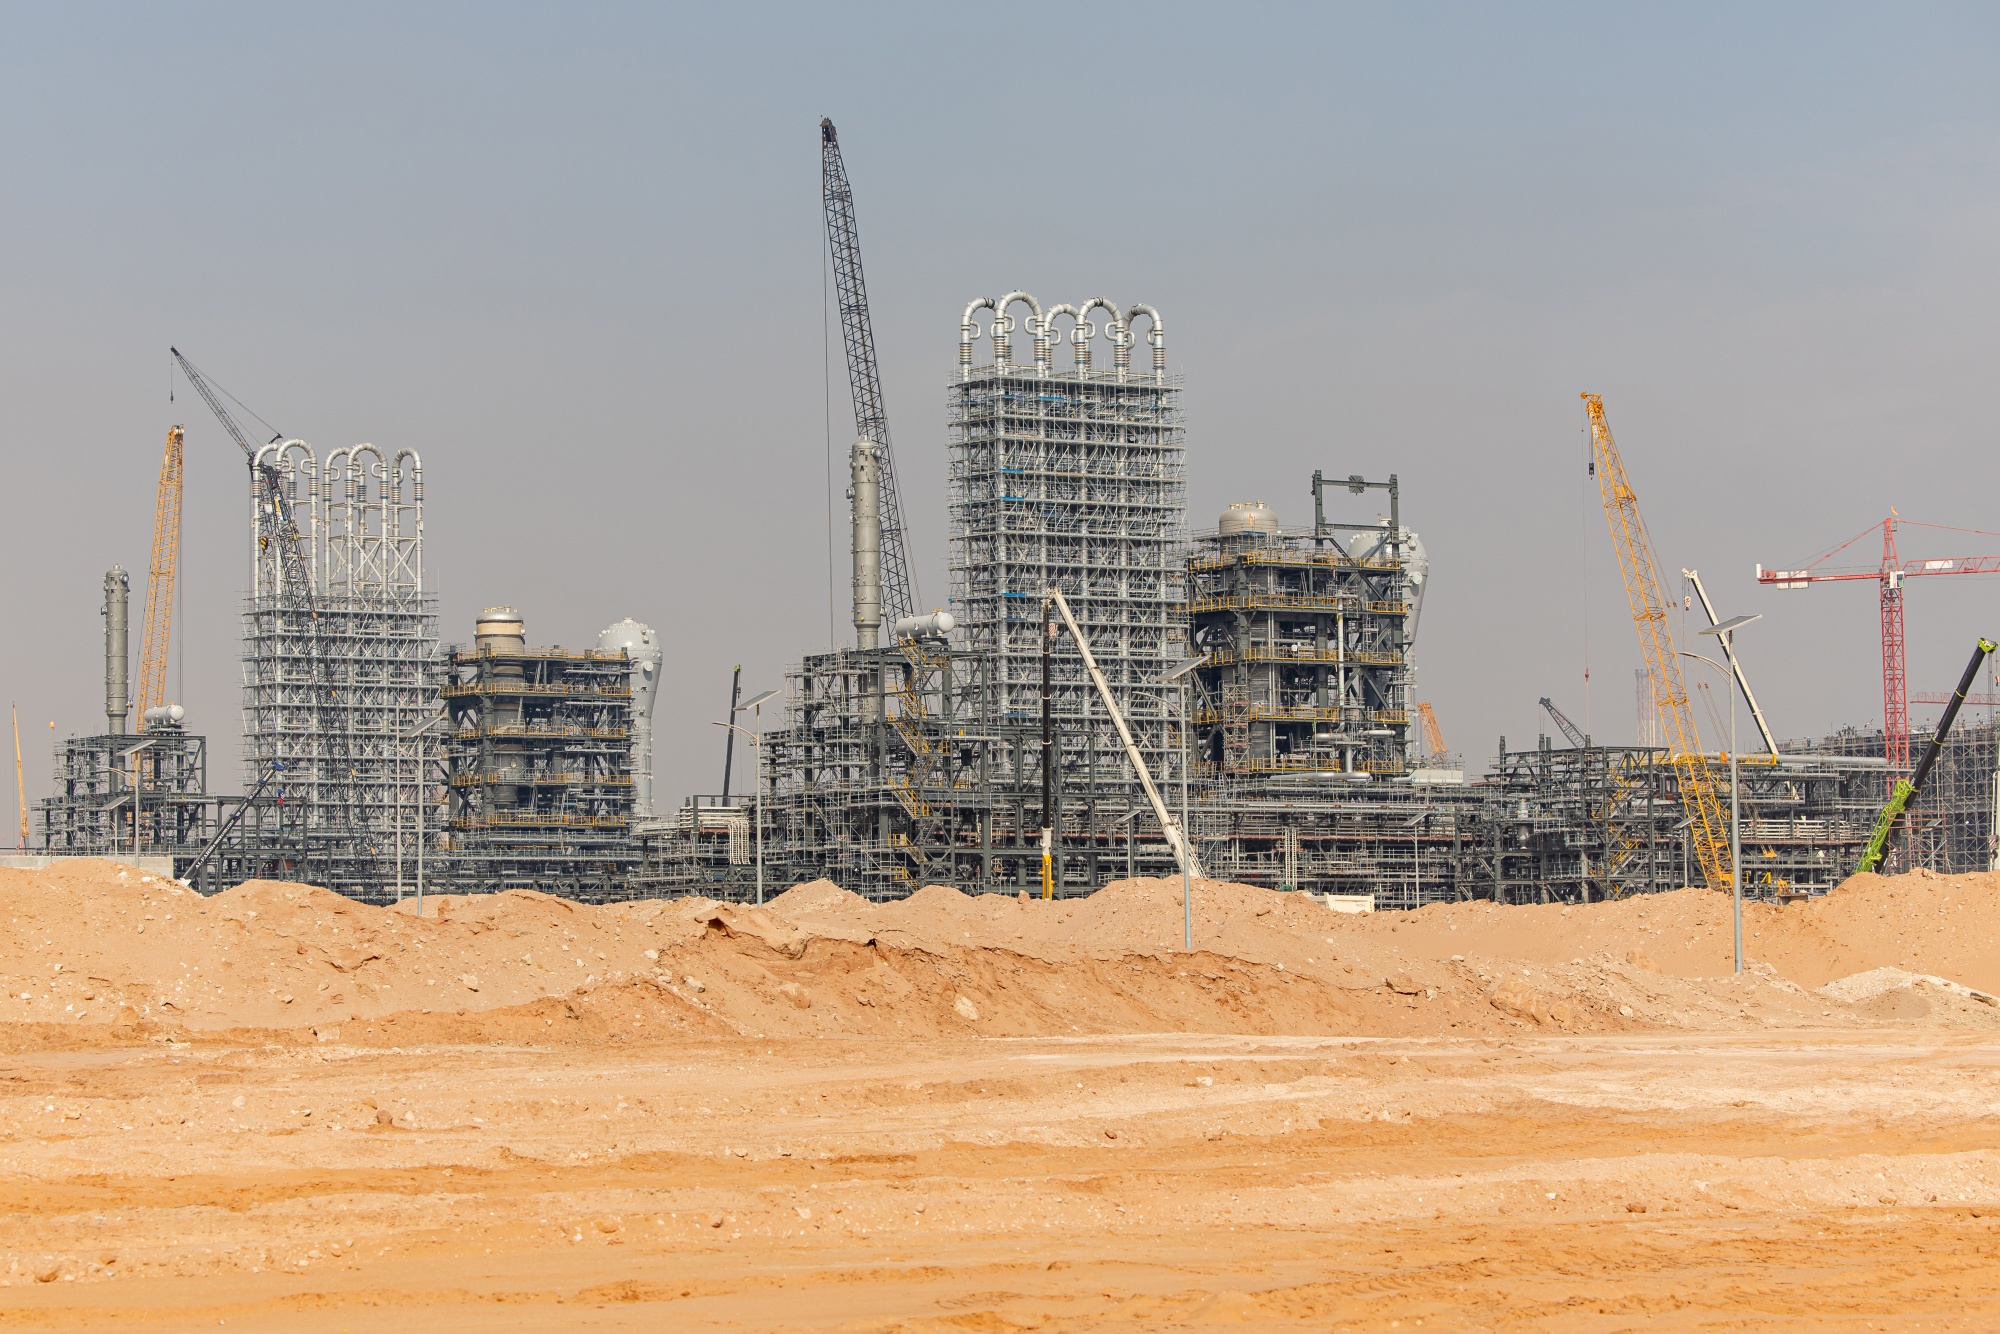 The Ruwais refinery complex under construction in Al Ruwais, United Arab Emirates.